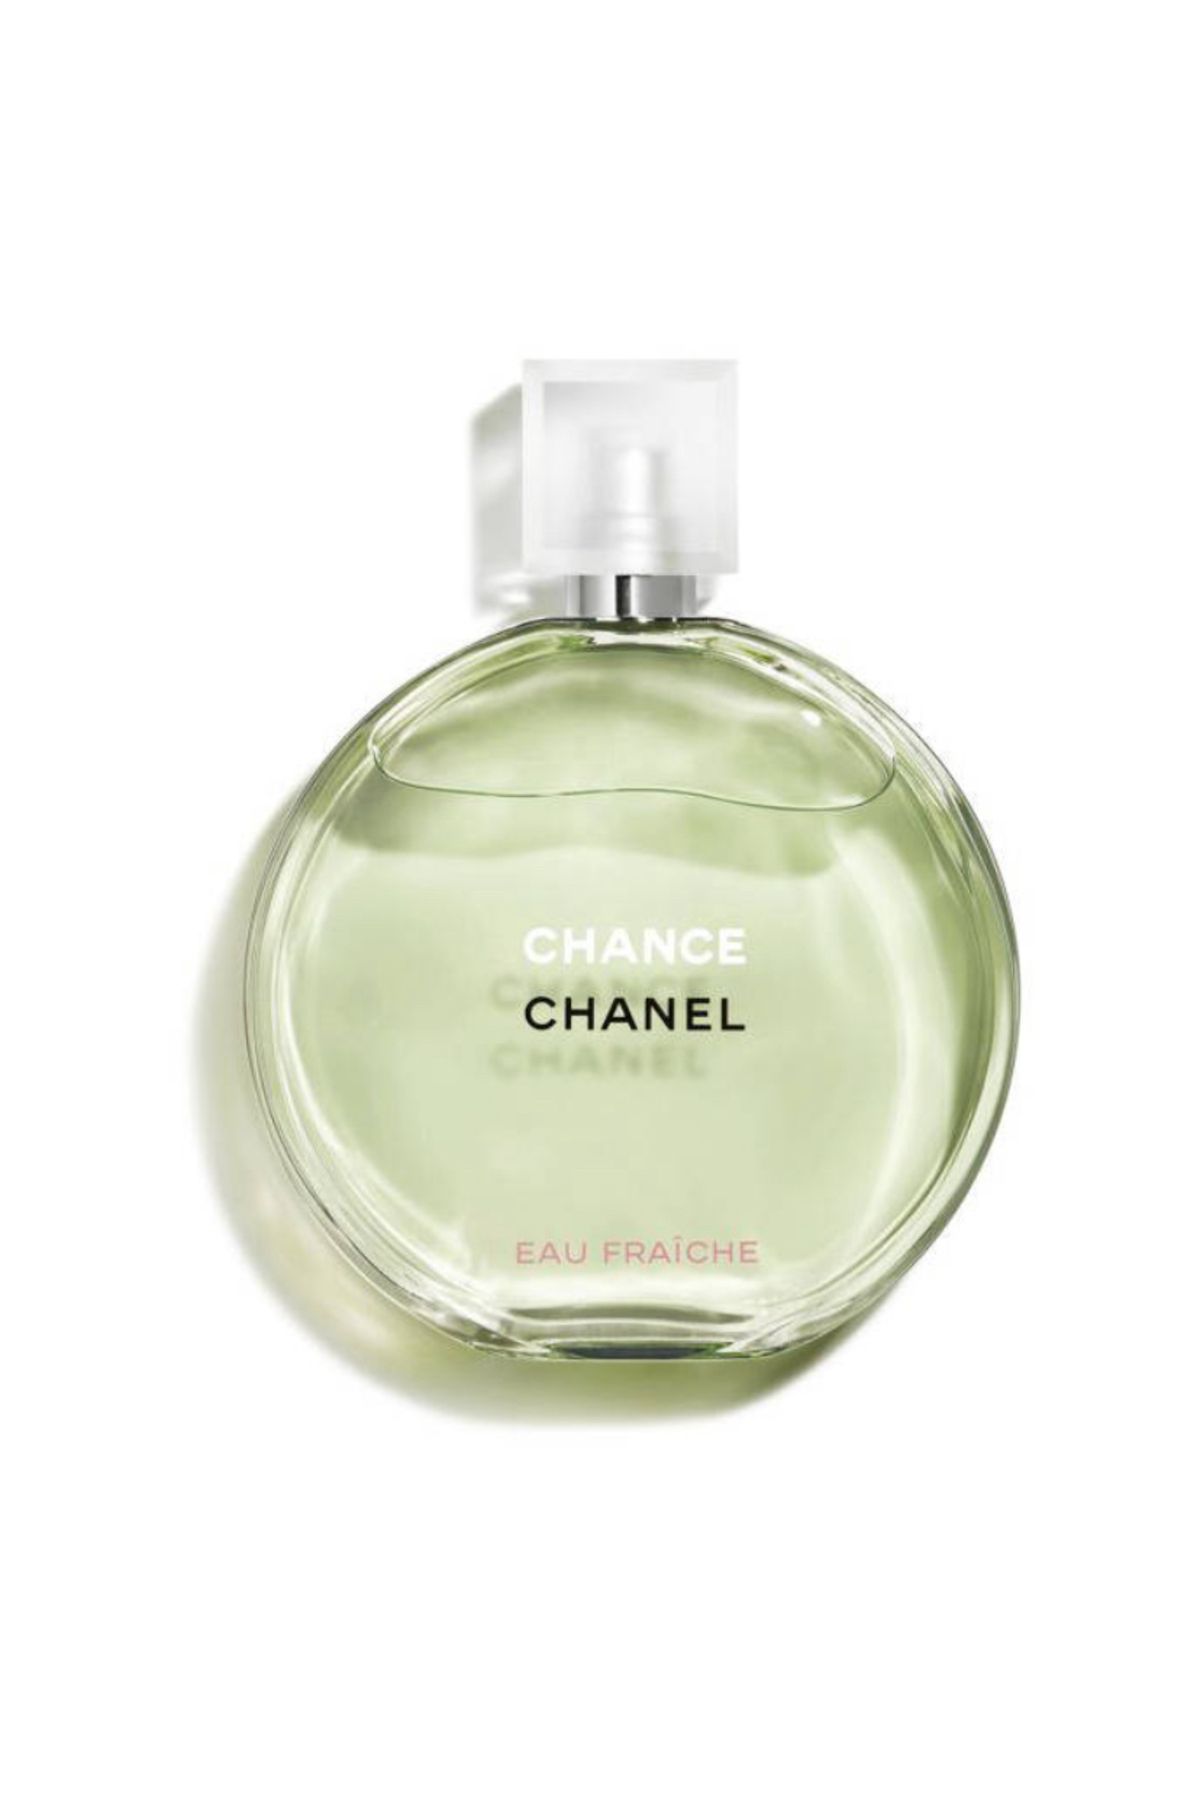 Chanel CHANCE EAU FRAICHE EDT KADIN PARFUM 150ml Pinkestcosmetics